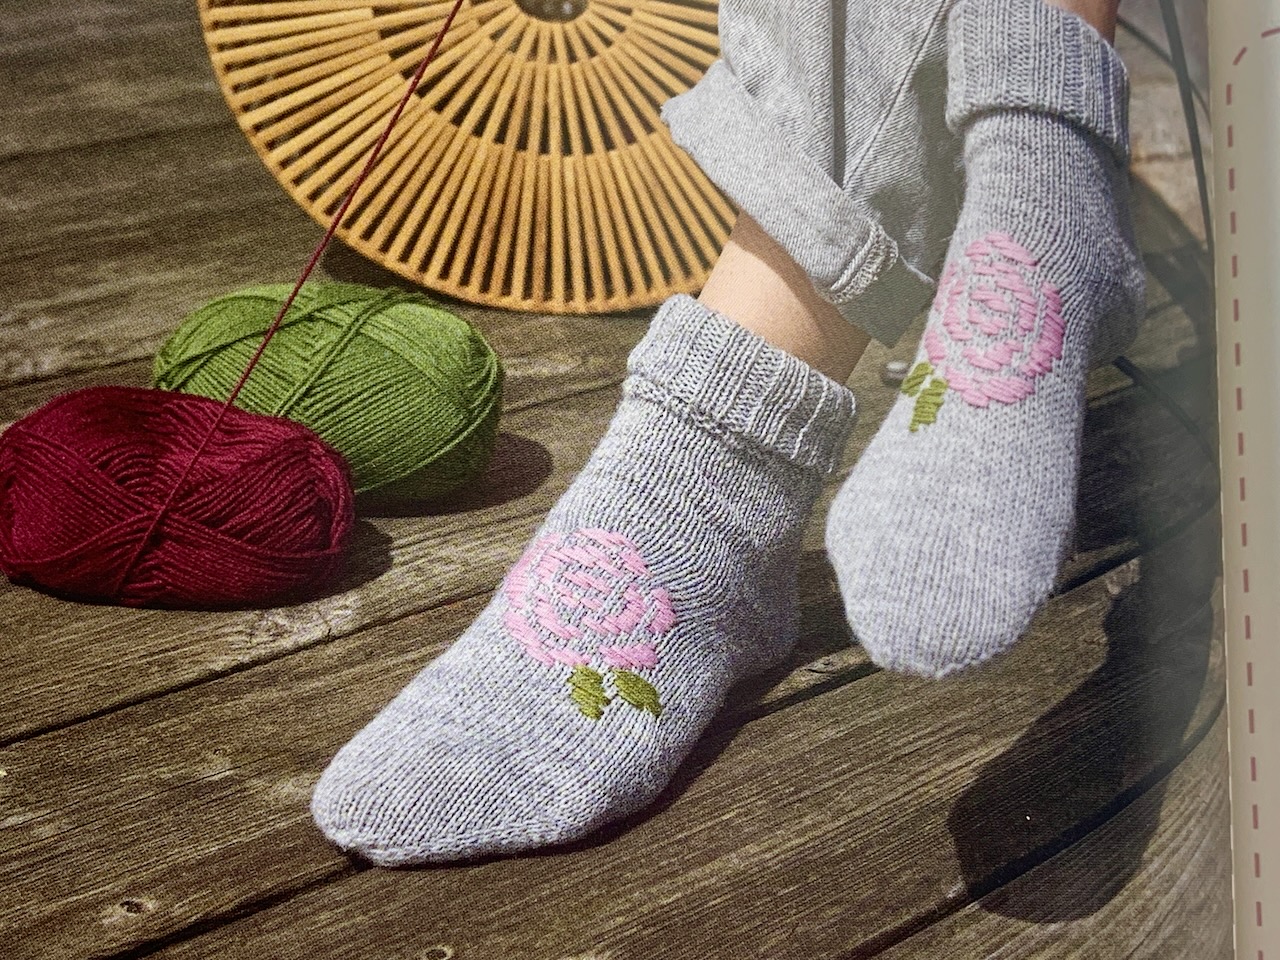 Pinja Socken aus dem Buch Roosimine Socken stricken